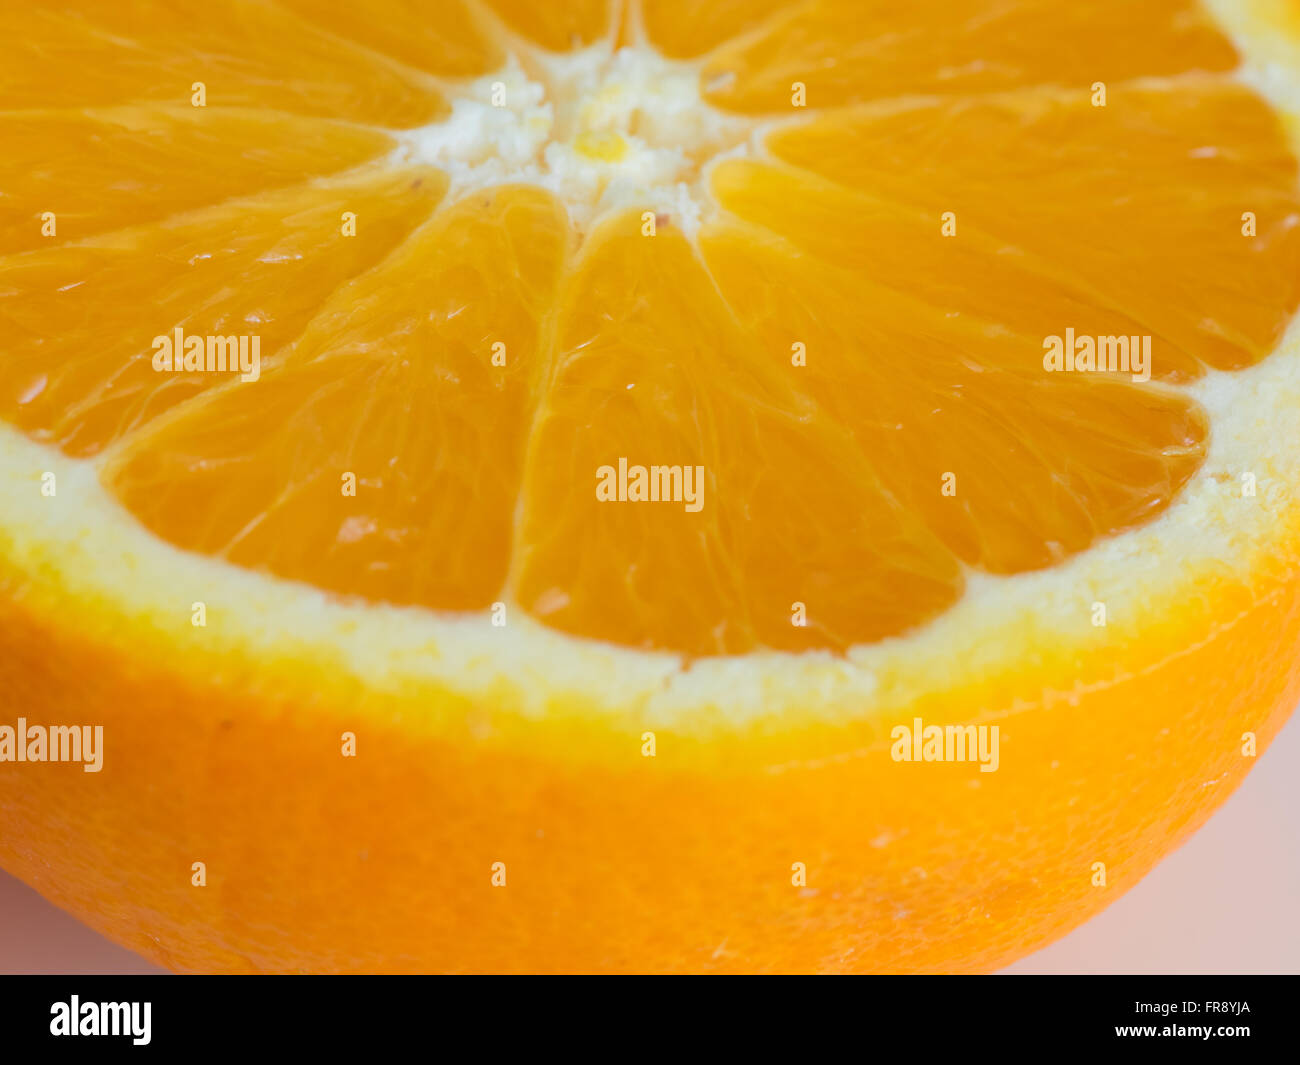 A navel orange. (Yum!) Stock Photo